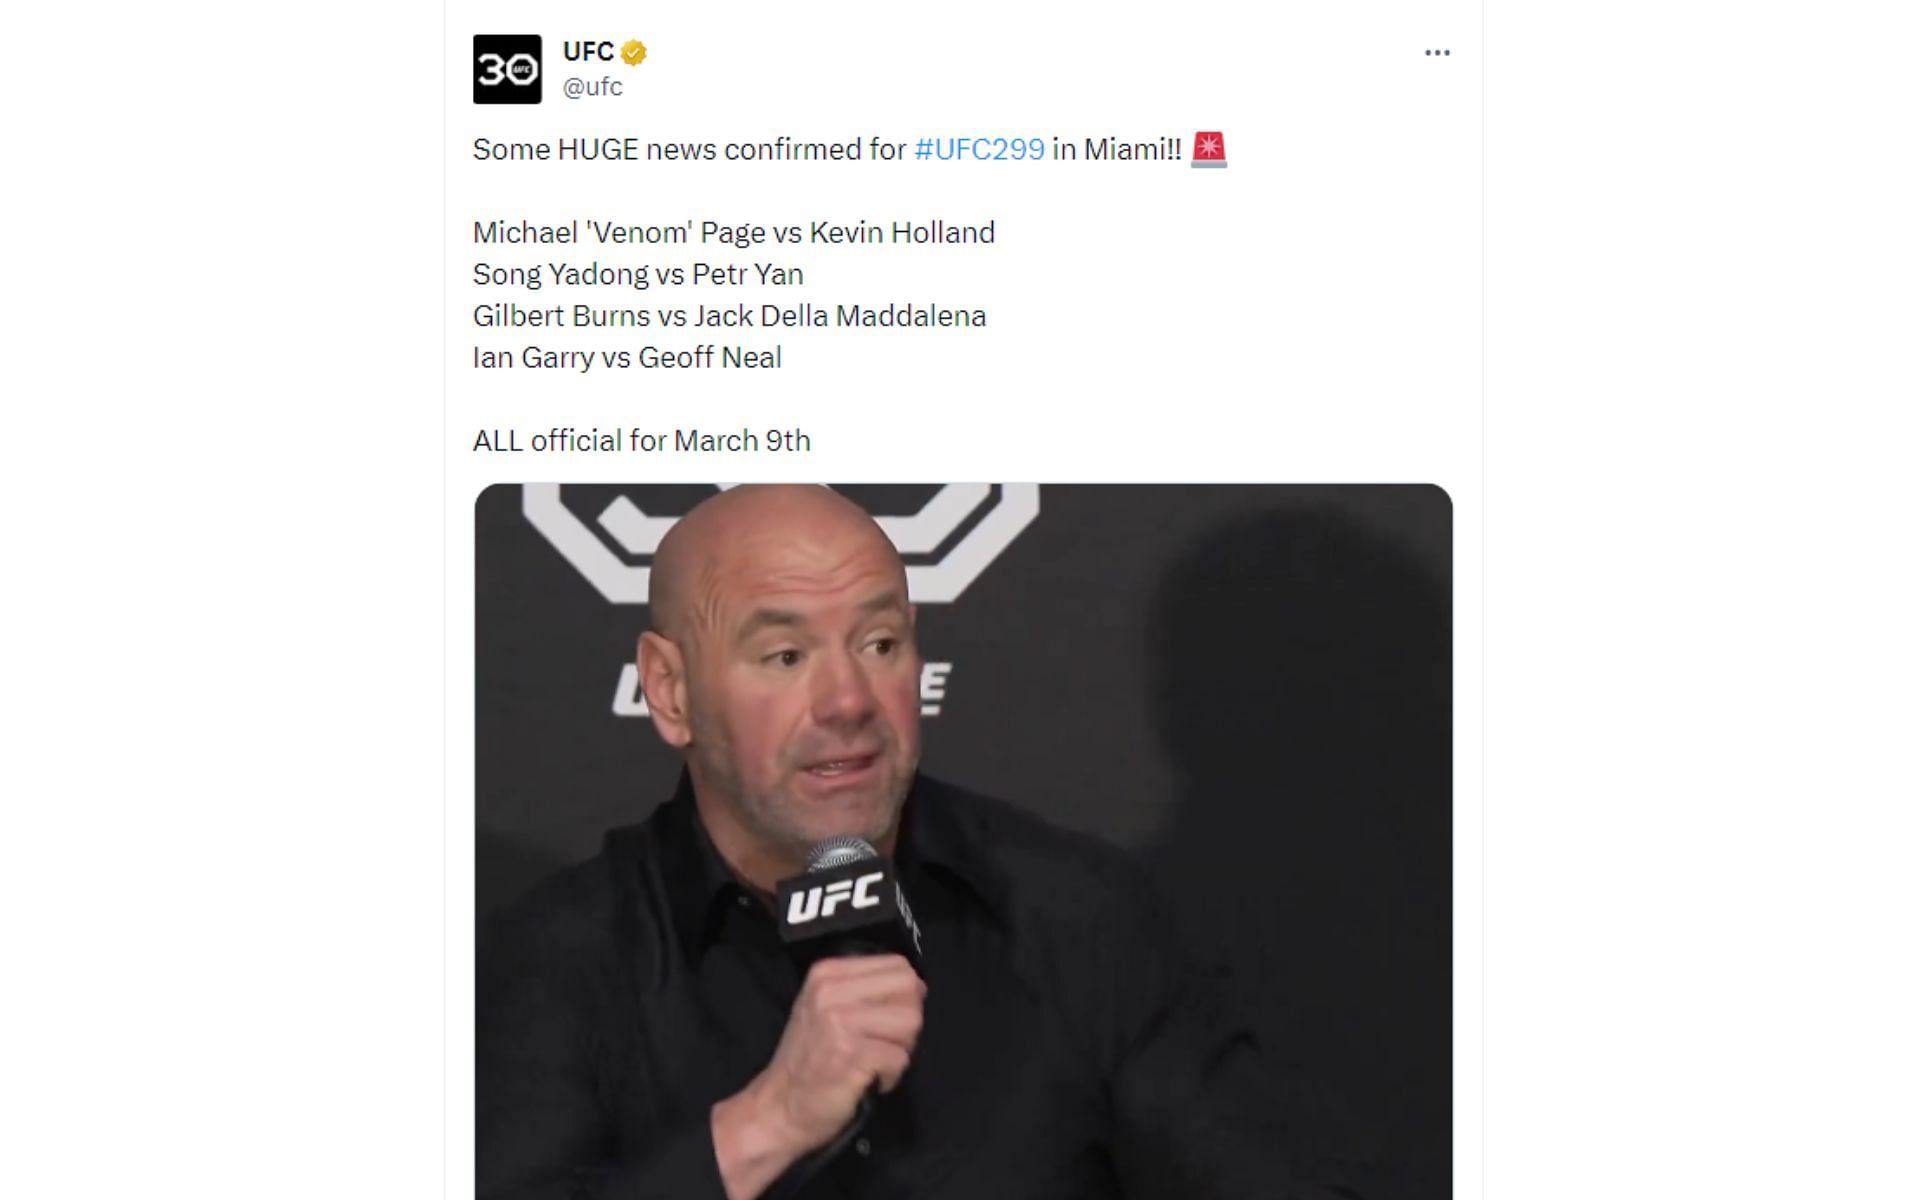 Tweet regarding bout announcements for UFC 299